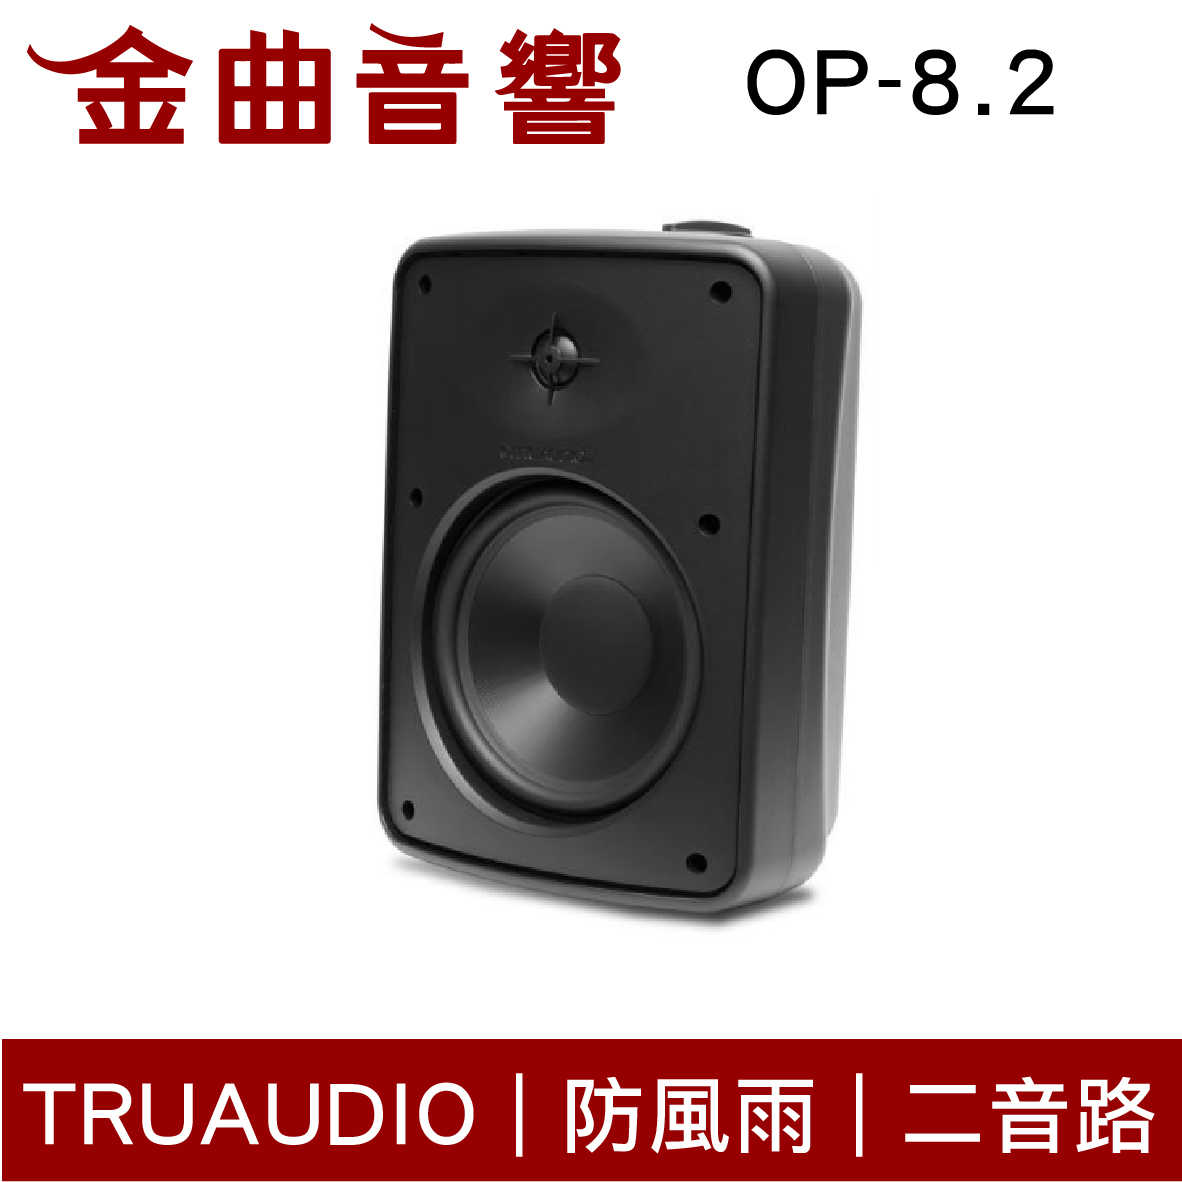 Truaudio OP-8.2 黑 戶外 防風雨 揚聲器 | 金曲音響